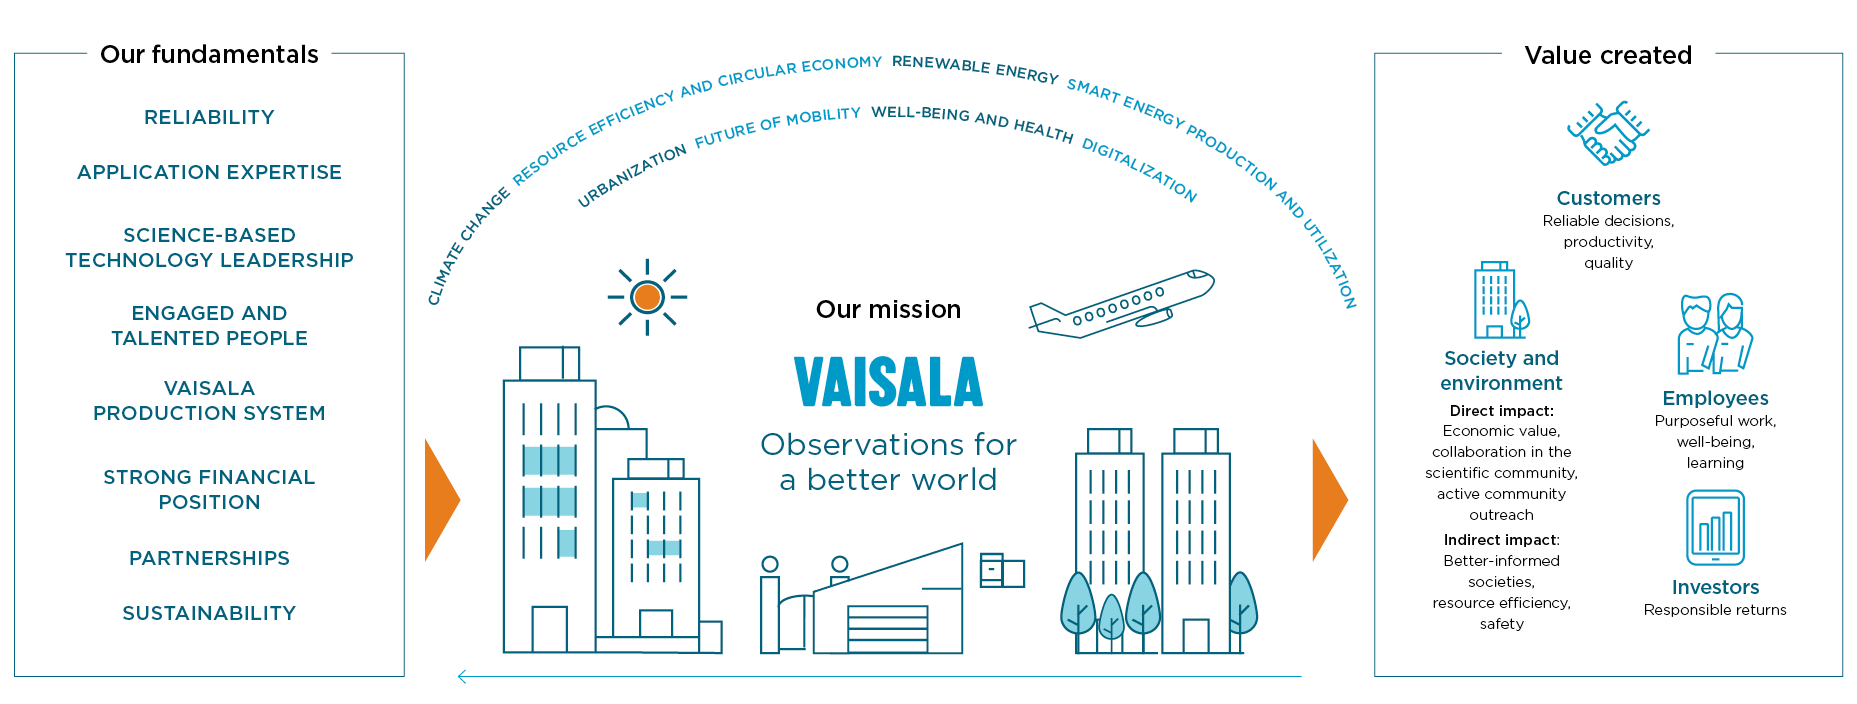 Vaisala Value Creation Model 2019